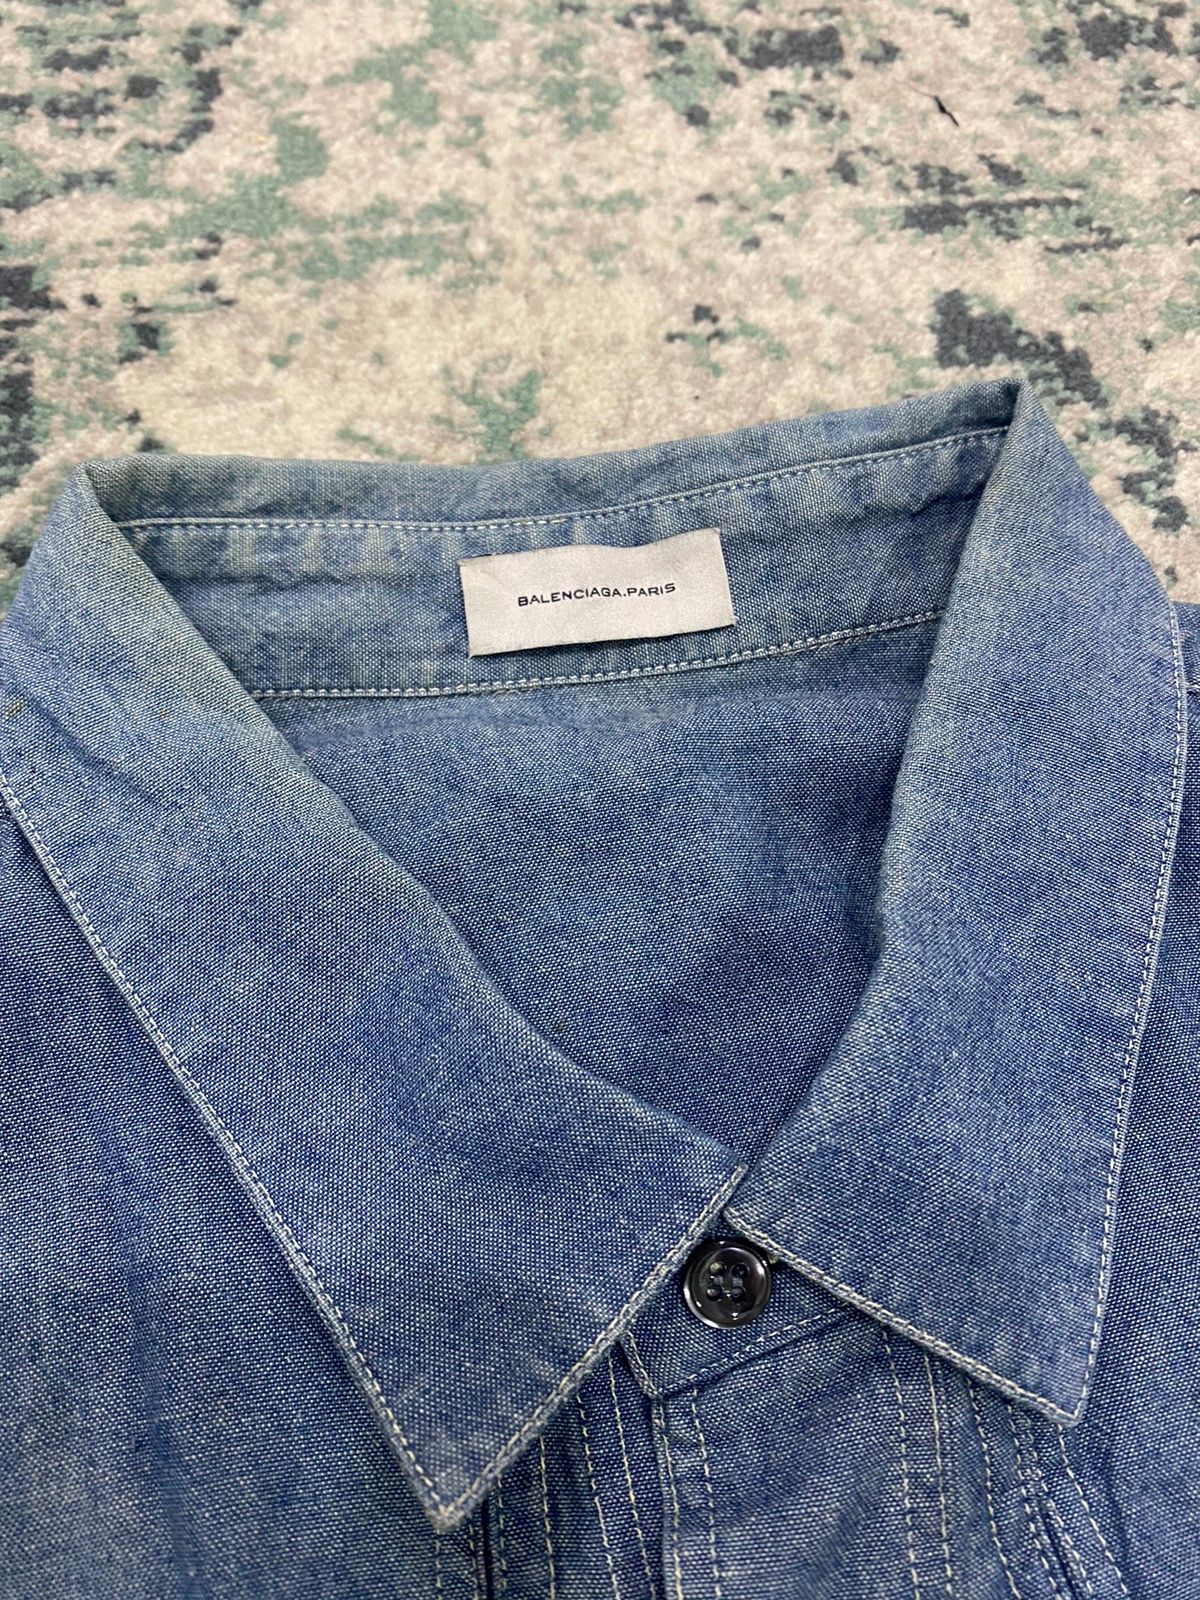 AW09 Balenciaga Paris Faded Hidden Pocket Denim Shirt - 6